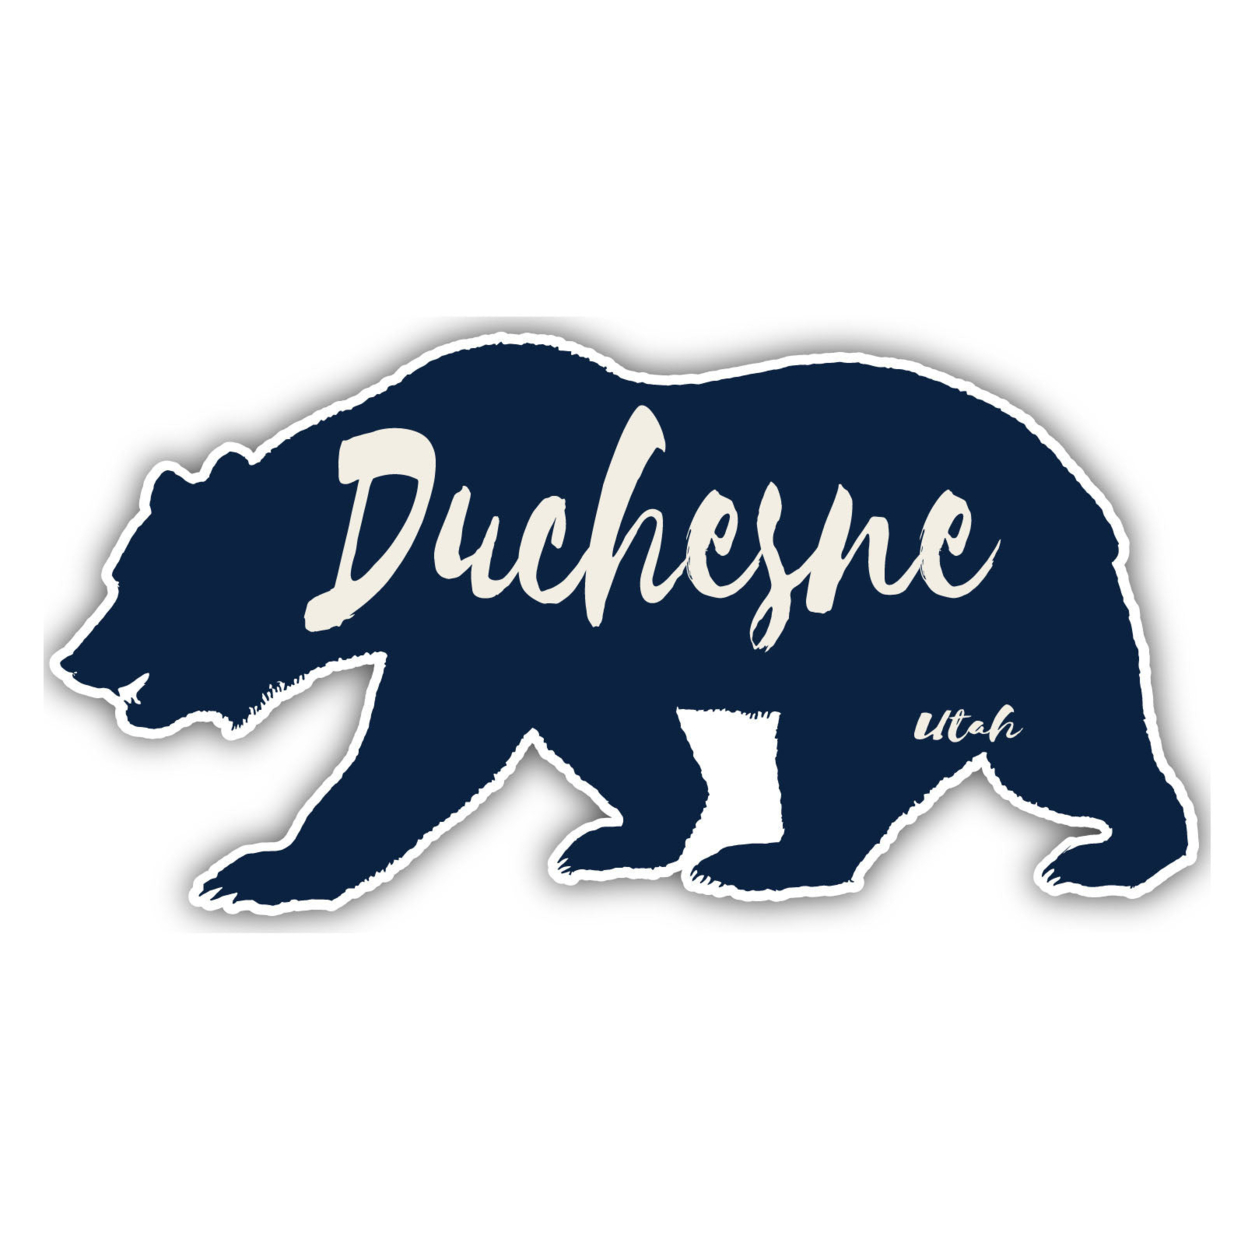 Duchesne Utah Souvenir Decorative Stickers (Choose Theme And Size) - Single Unit, 8-Inch, Bear